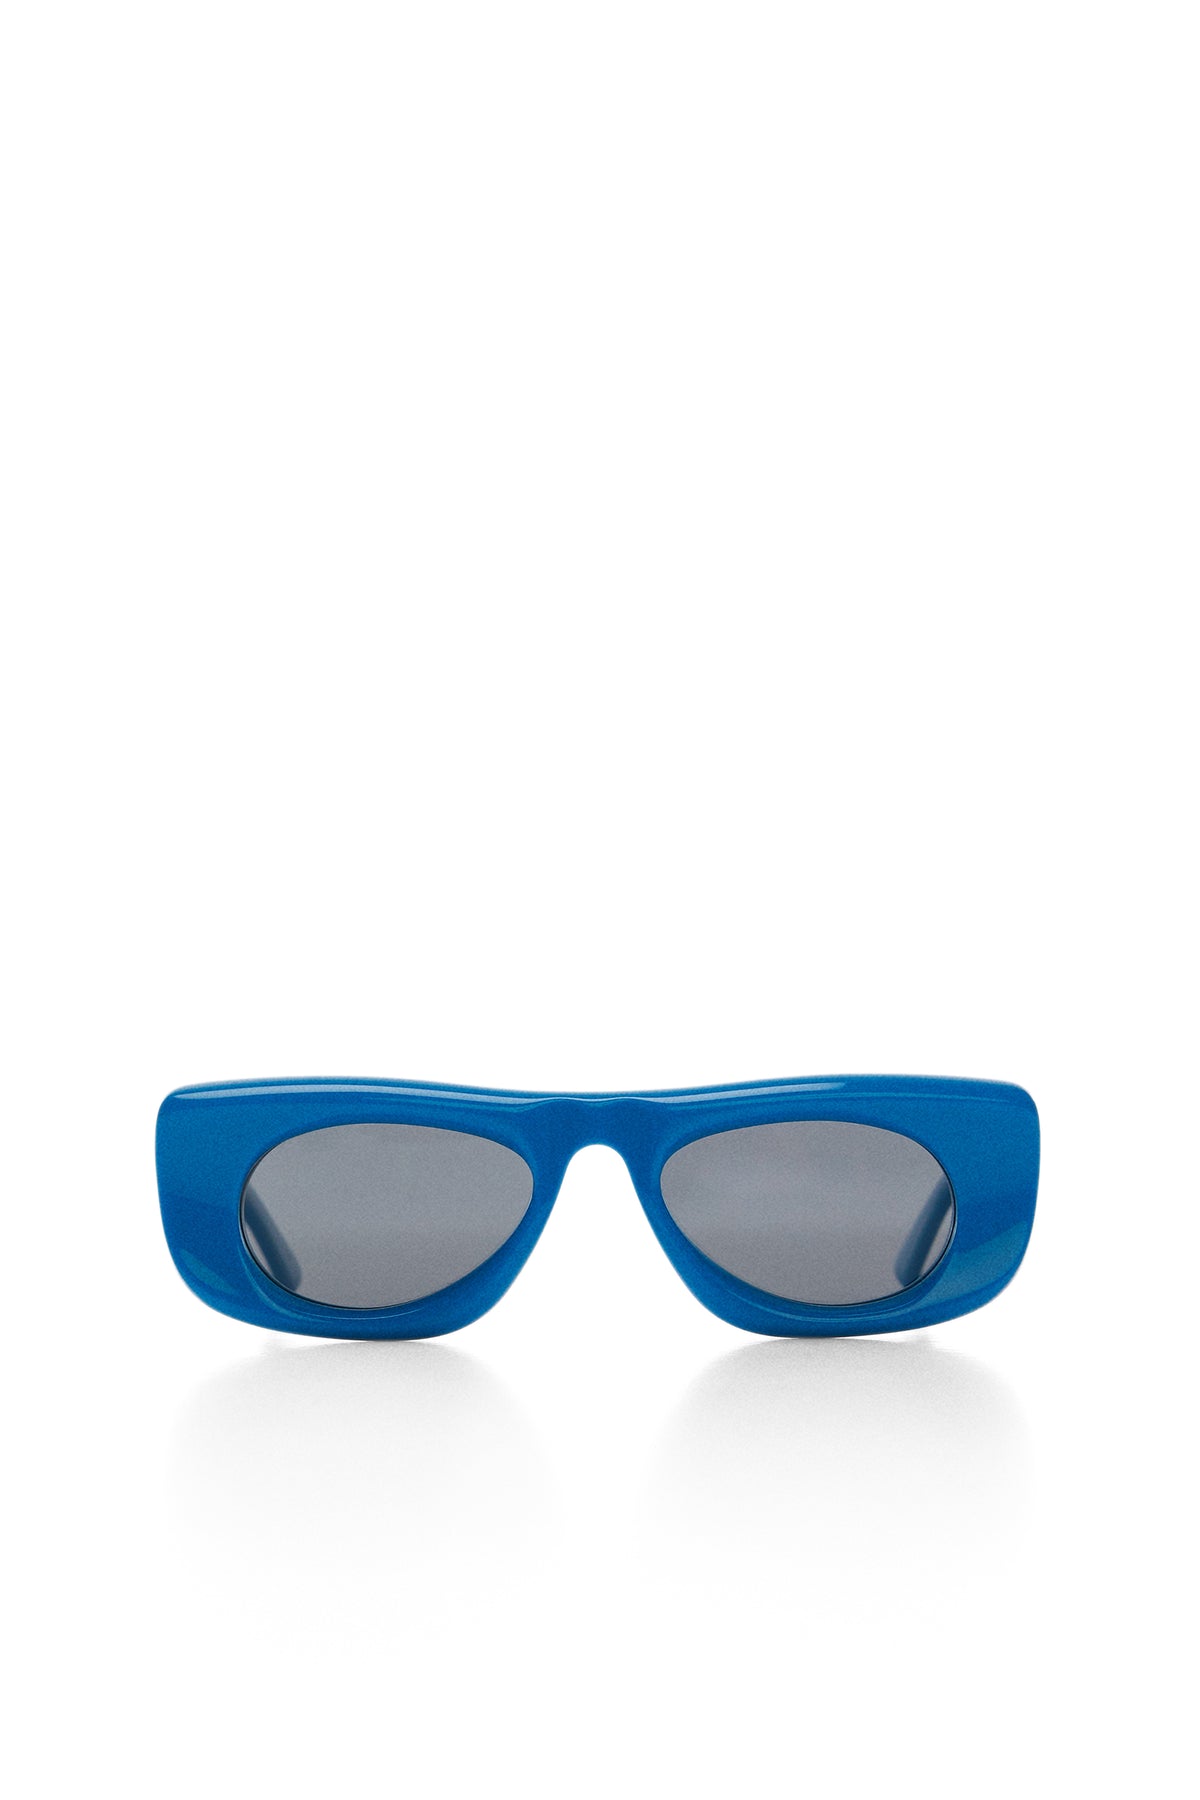 SM X MANGO Yuvi Sunglasses in Ocean